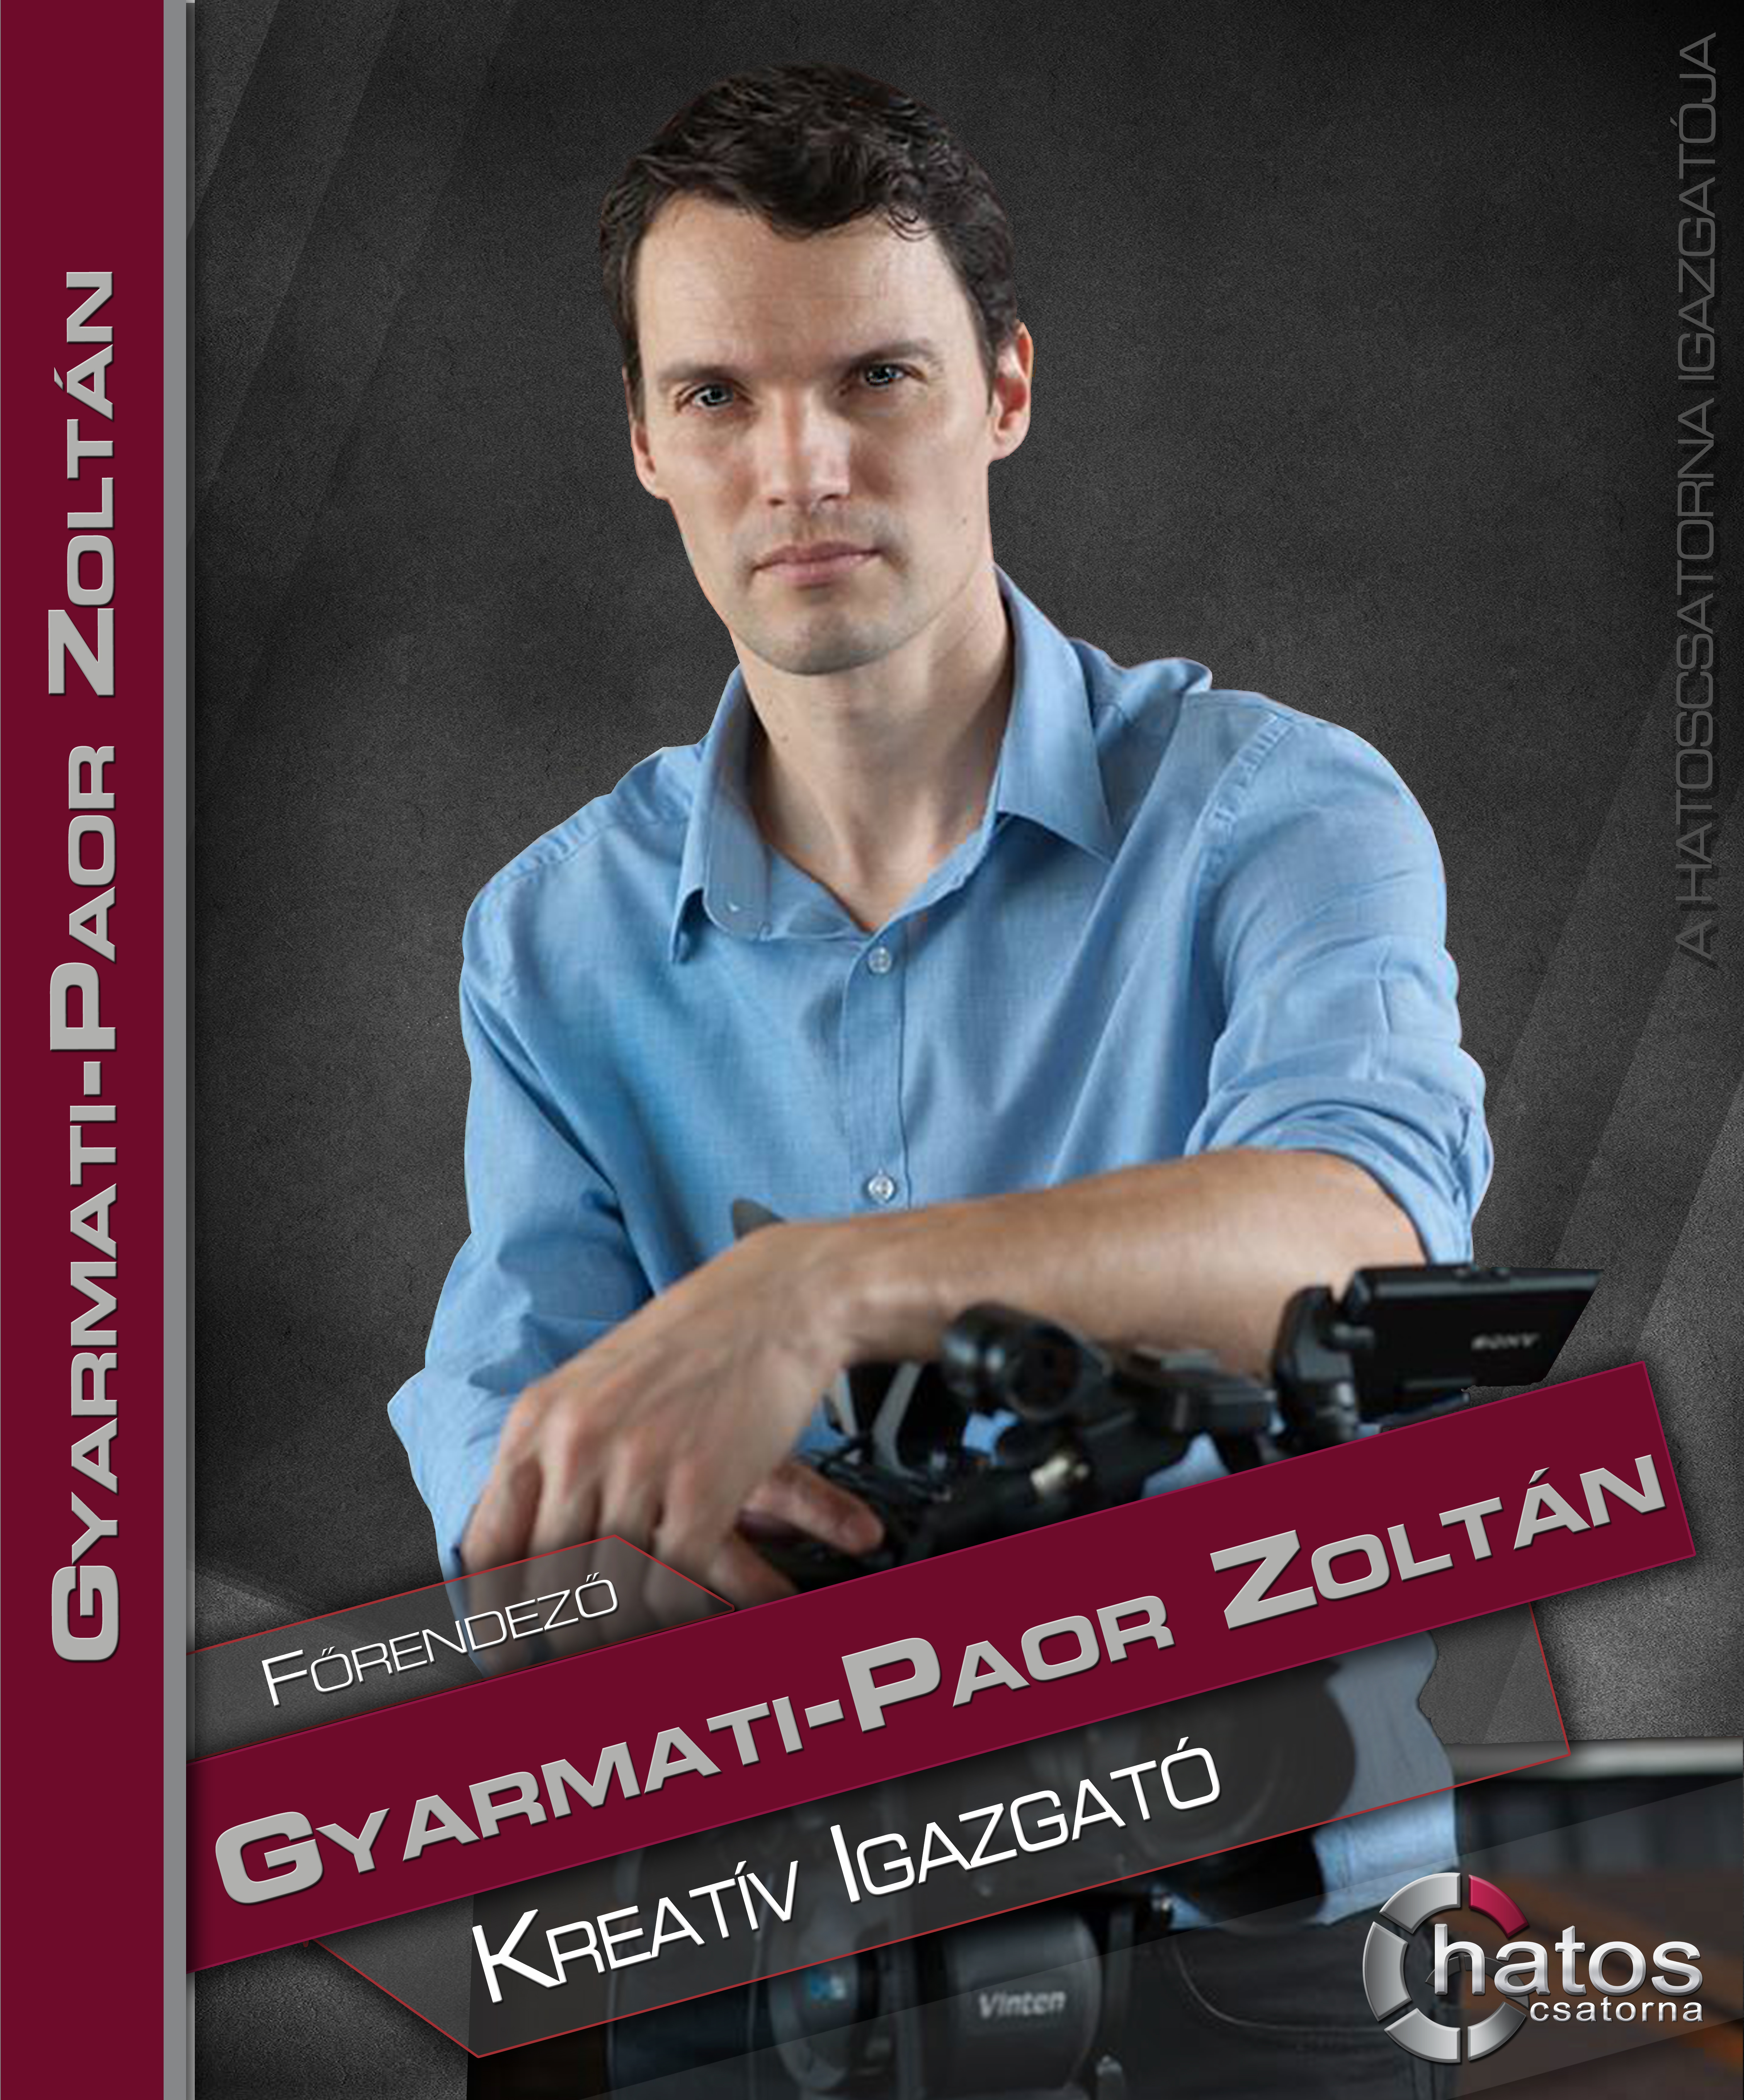 dr. Gyarmati-Paor Zoltán